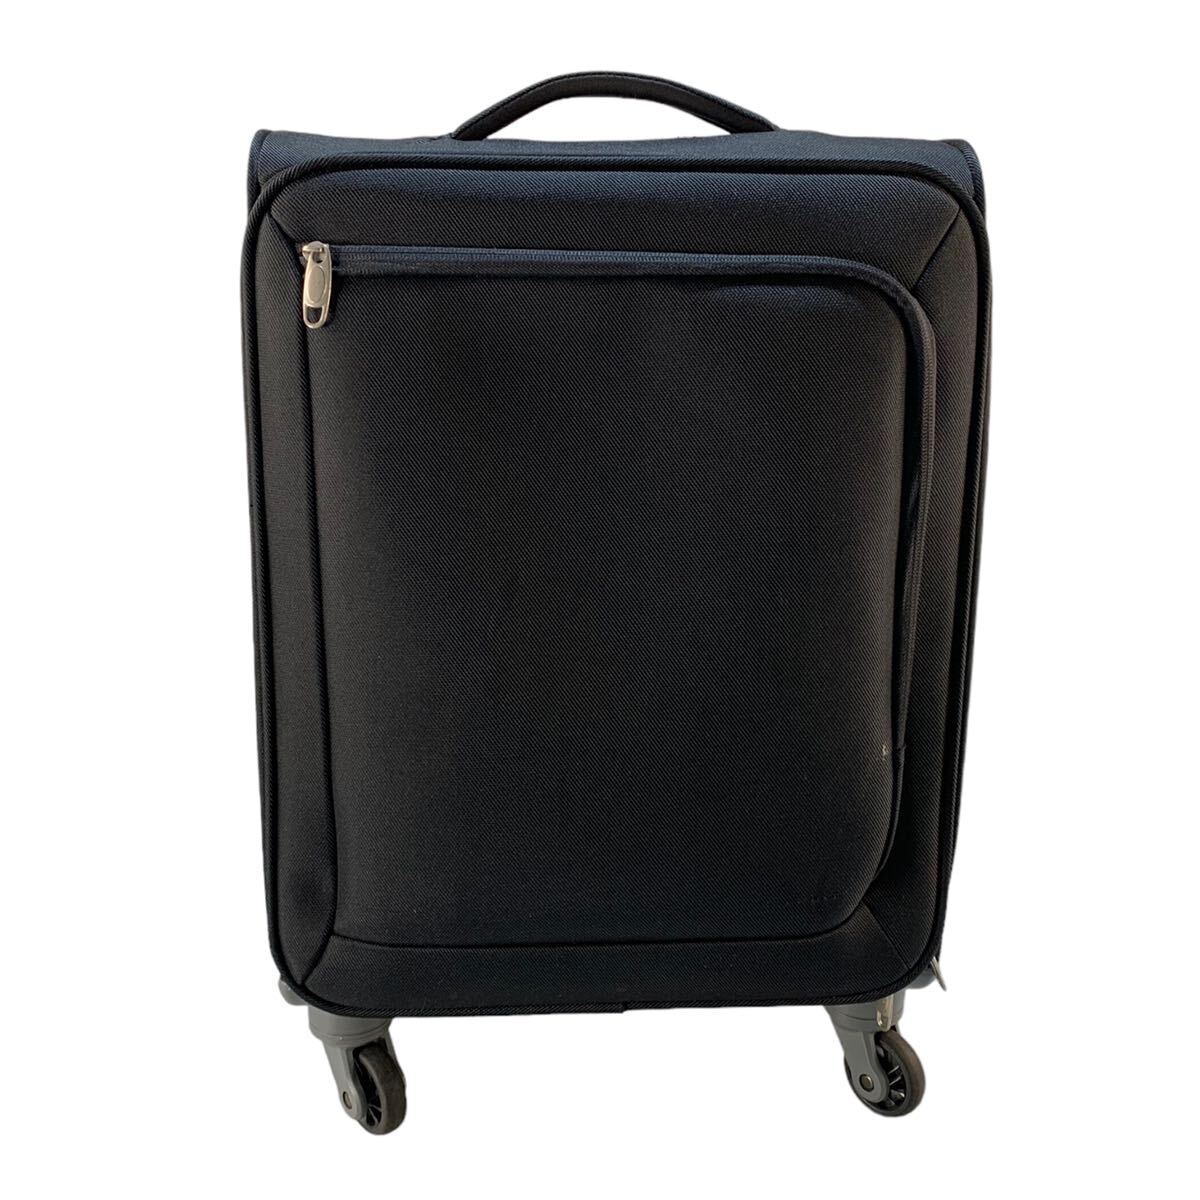 *ace. lock paint SS Ace Carry case suitcase 31L machine inside bringing in size black 2.3 kilo 4 wheel key less secondhand goods control J717